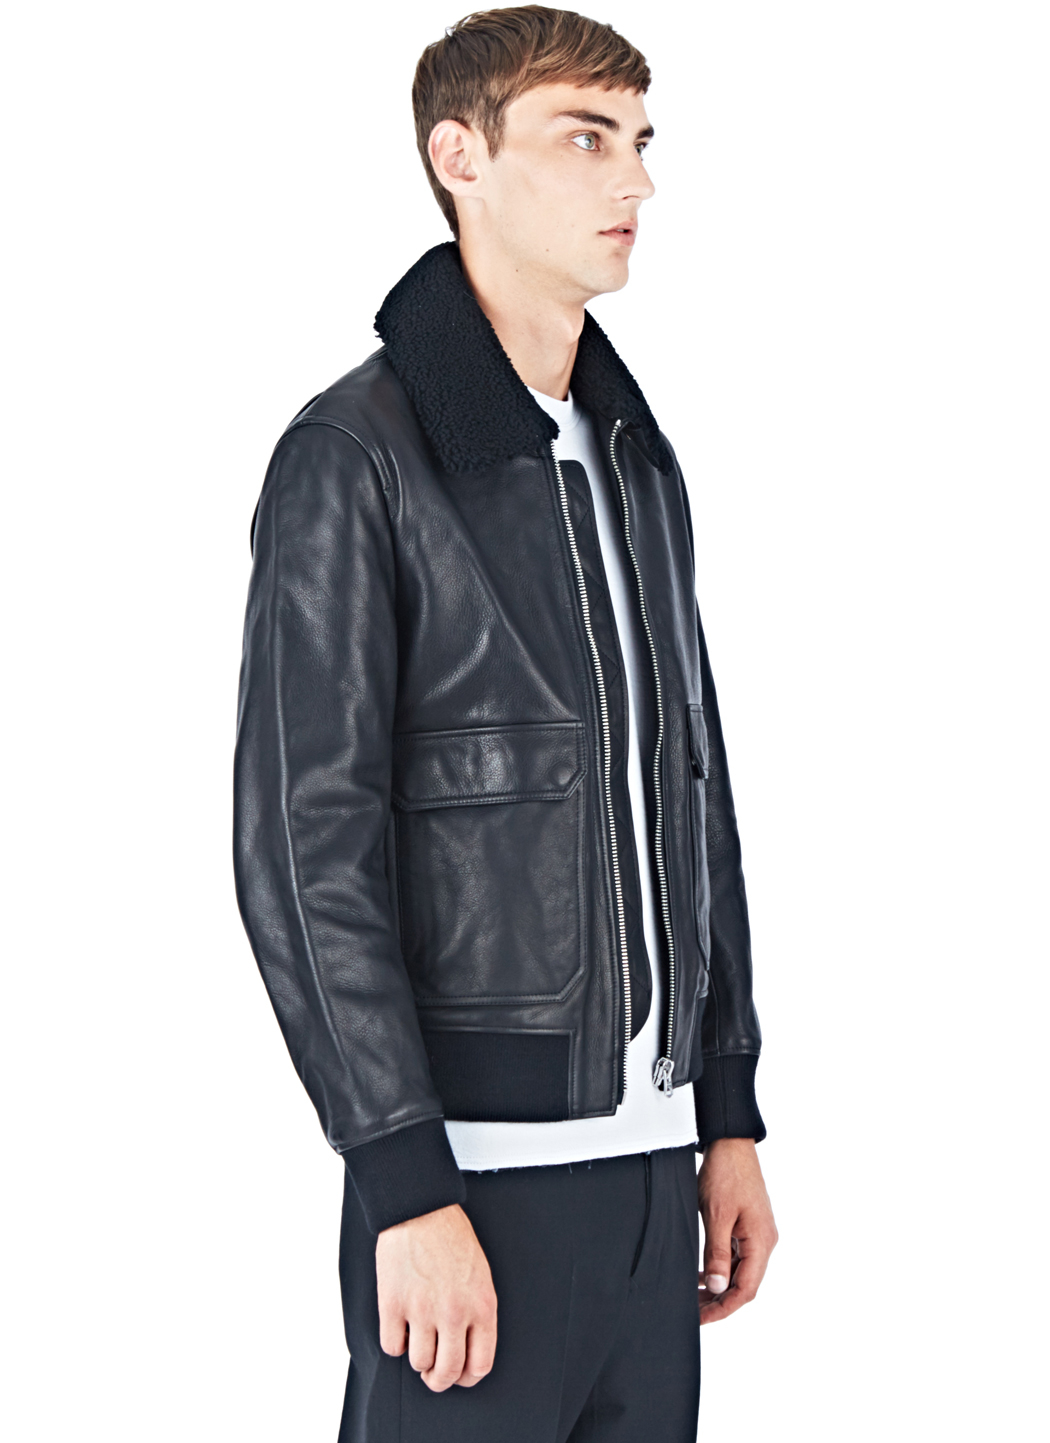 Lyst - Acne Studios Abel Leather Jacket in Black for Men